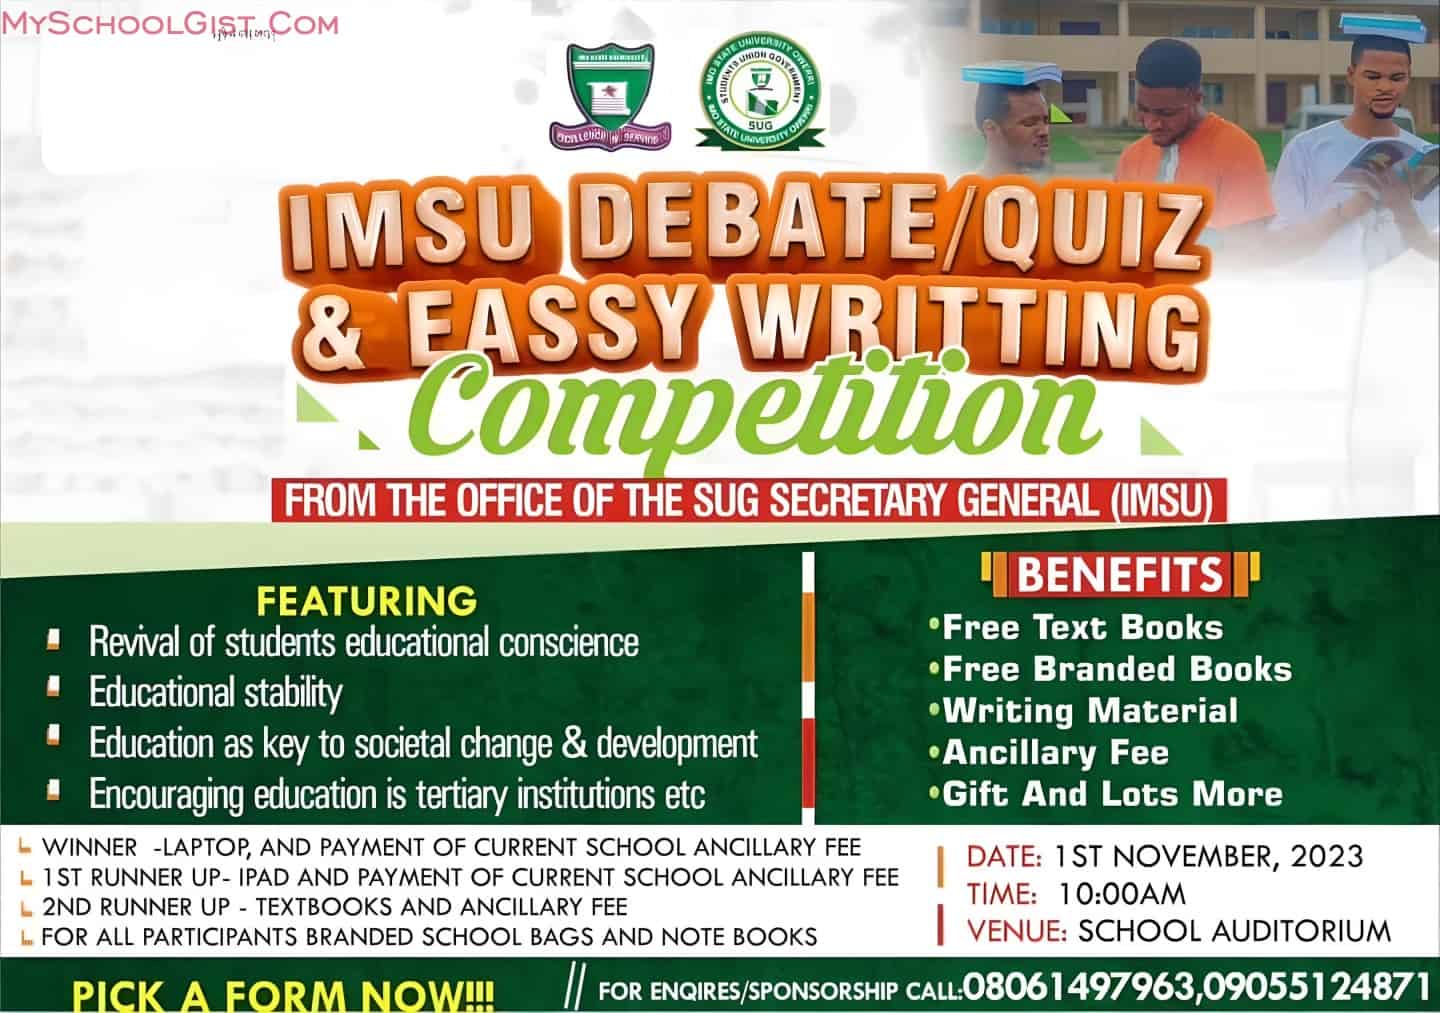 IMSU Debate/Quiz & Essay Writing Competition